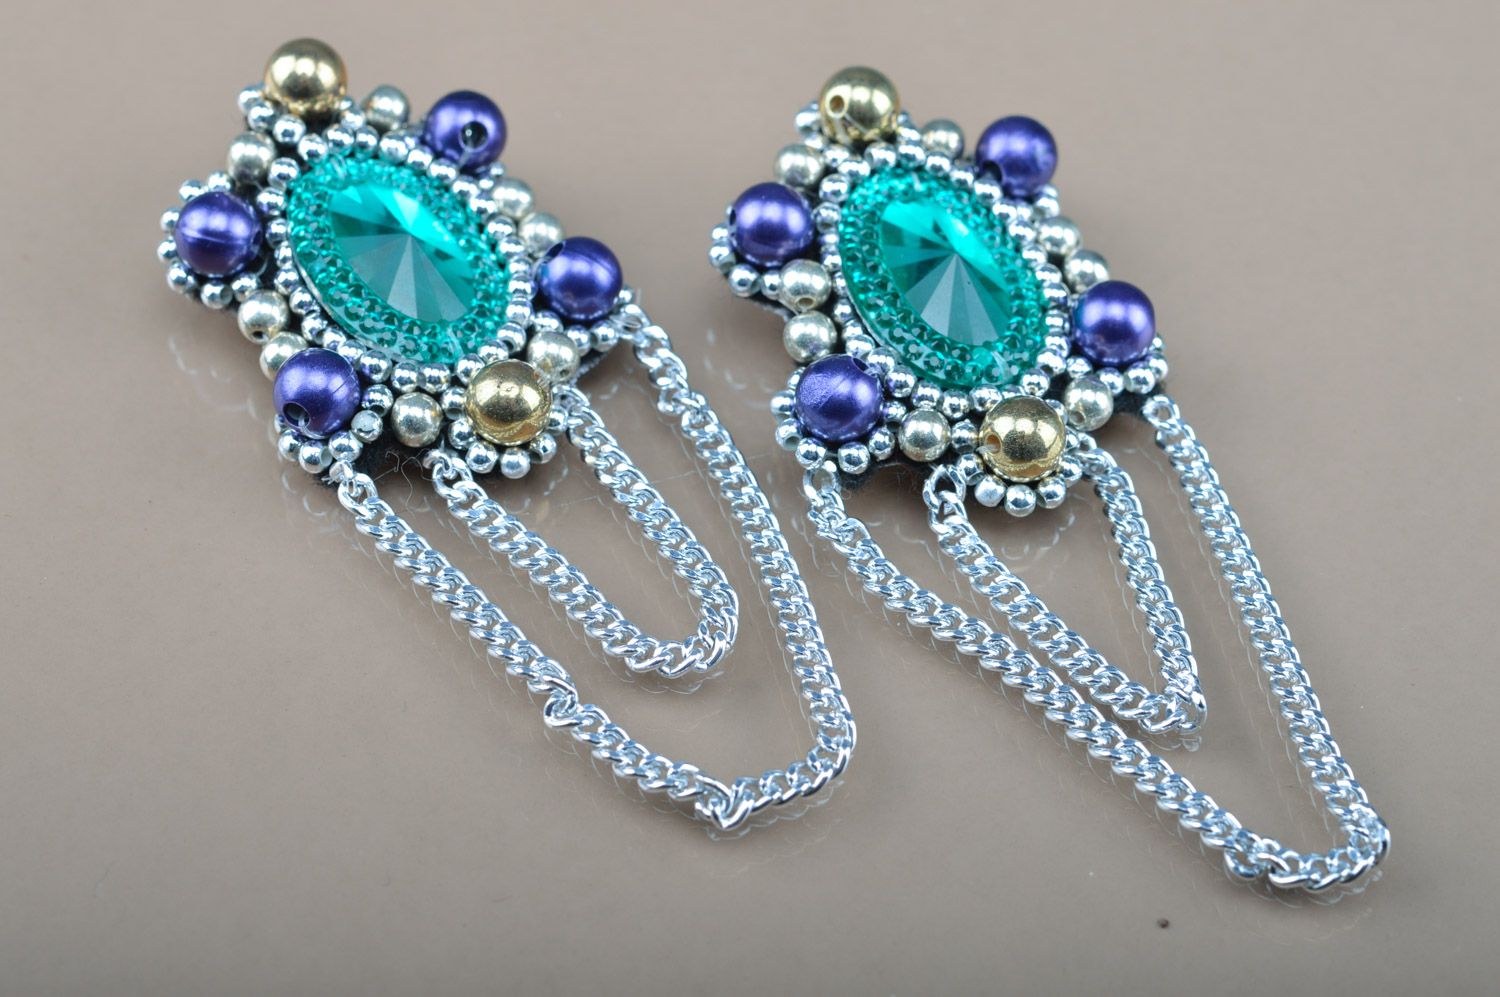 Handmade festive beaded earrings with rhinestones and chains on felt basis photo 1